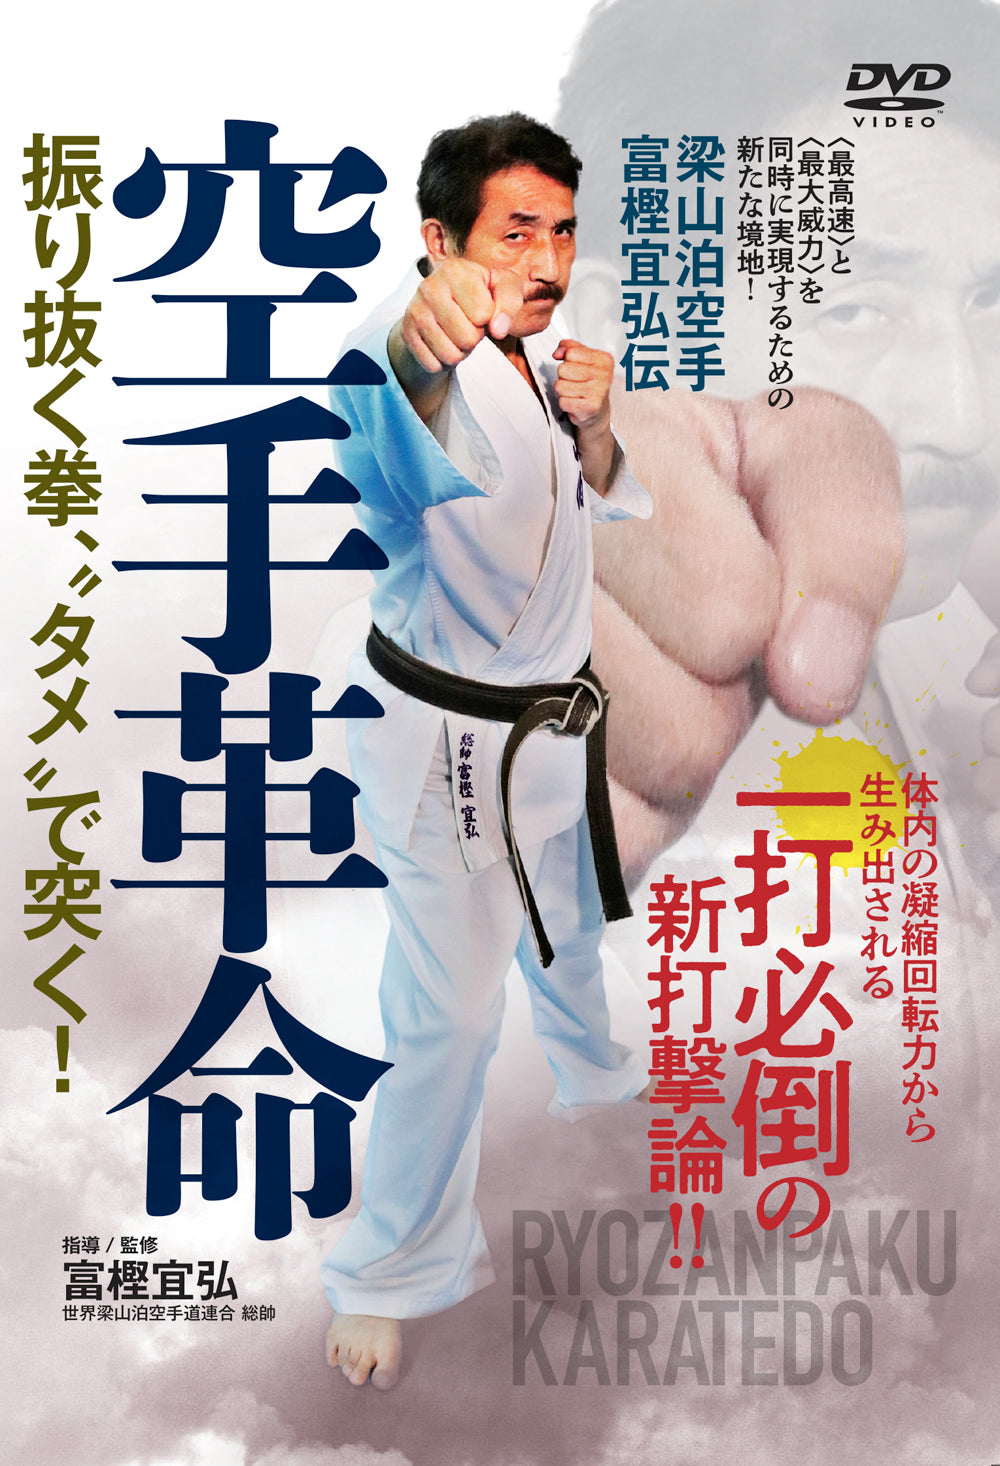 Ryozanpaku Karatedo DVD by Yoshihiro Togashi - Budovideos Inc